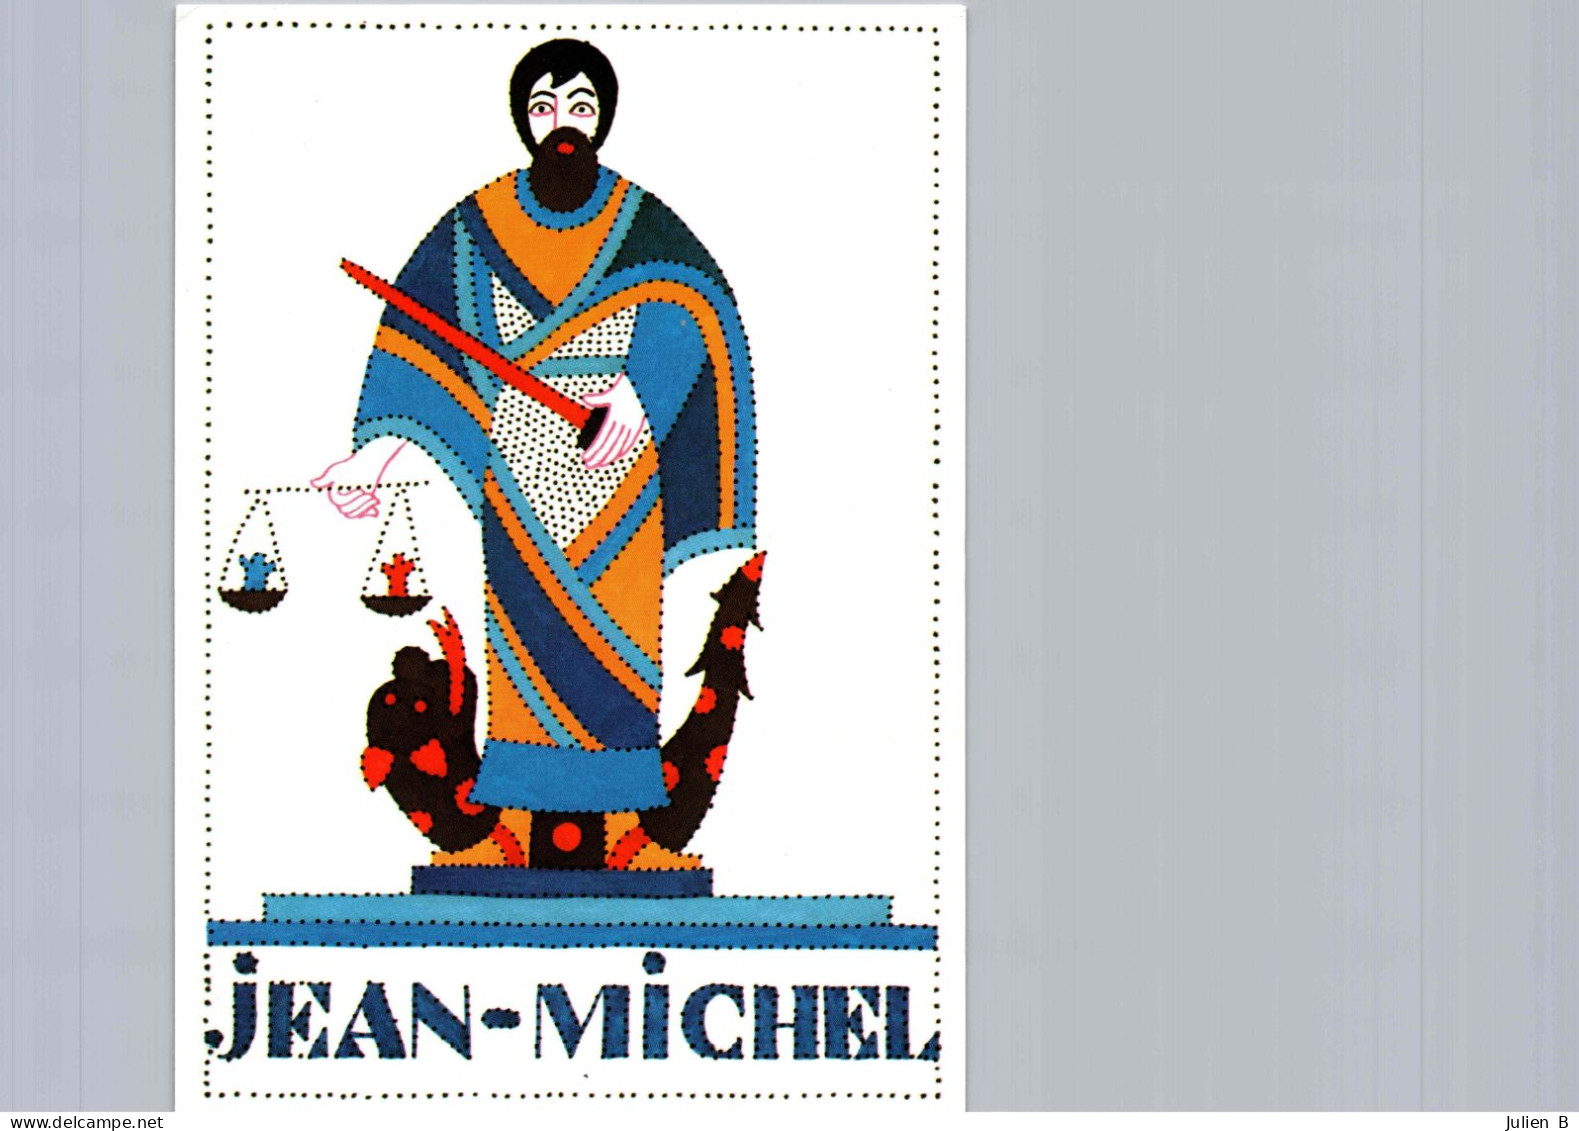 Jean-Michel, Edition Betula - Prénoms